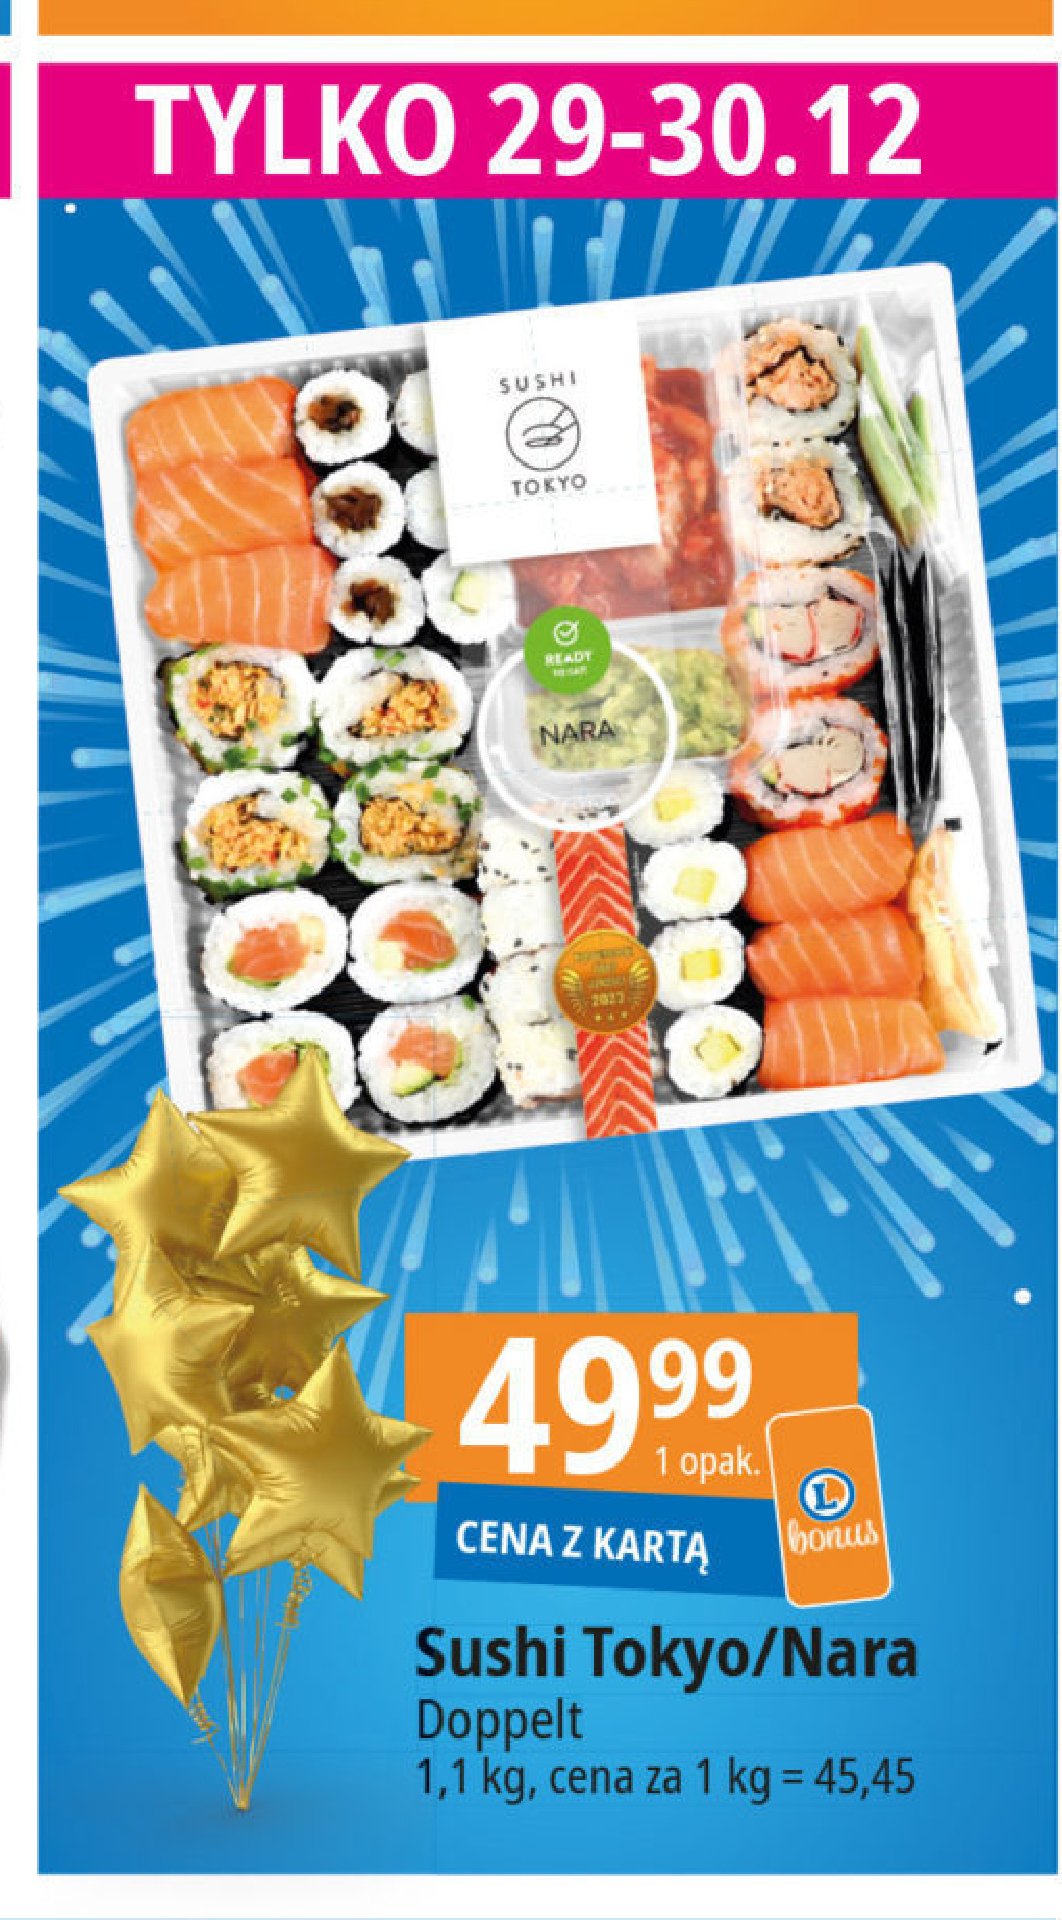 Sushi nara Doppelt promocja